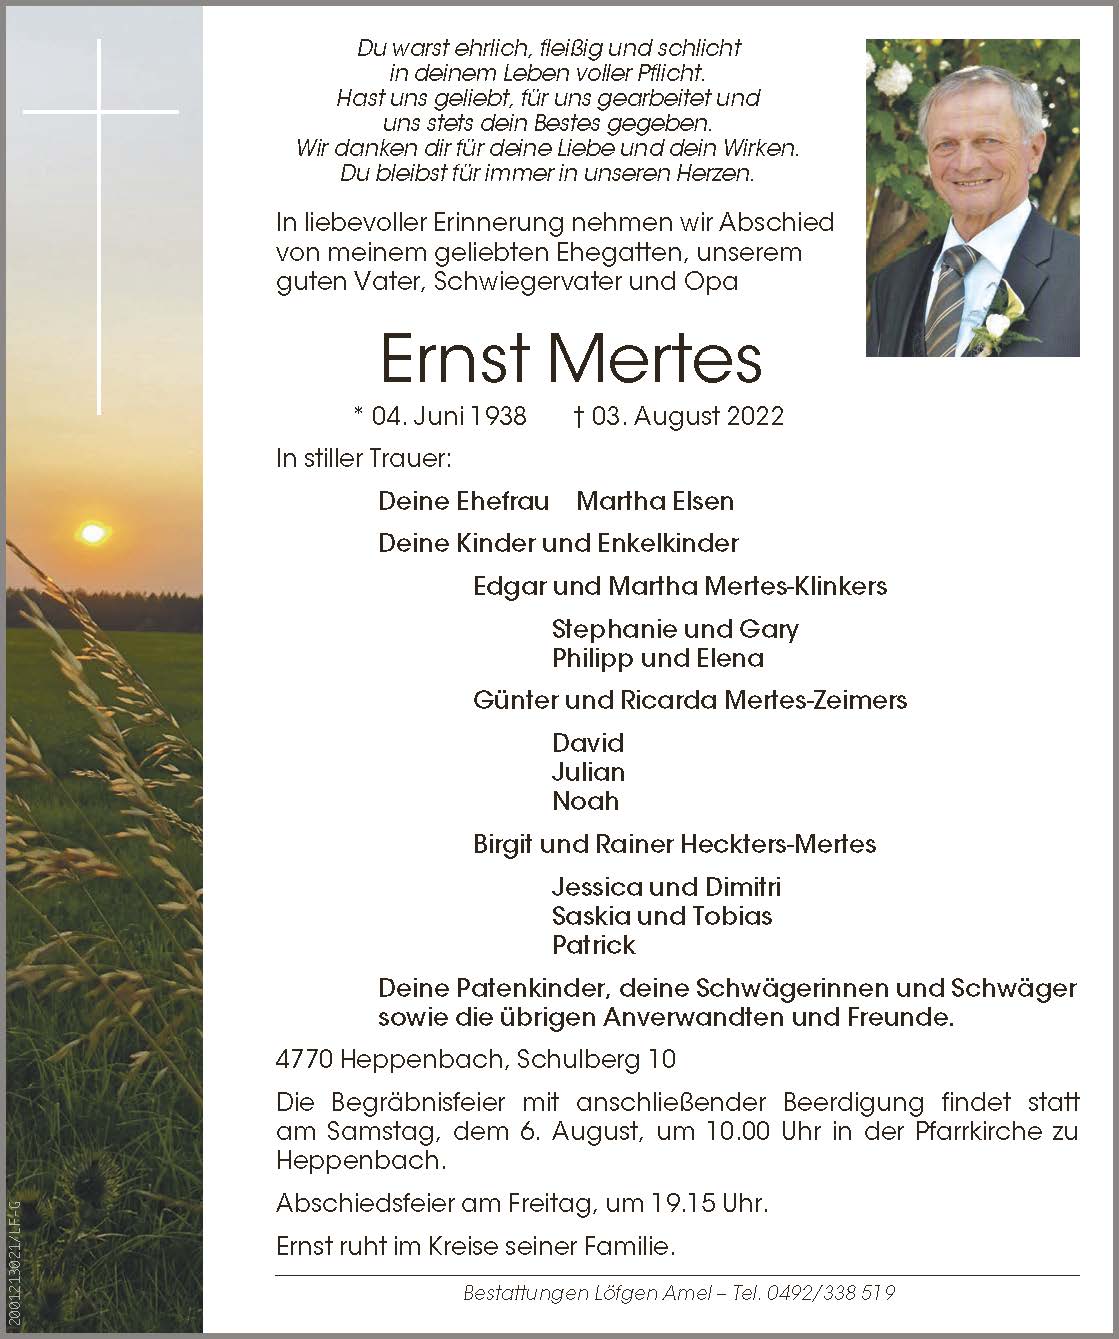 Ernst Mertes